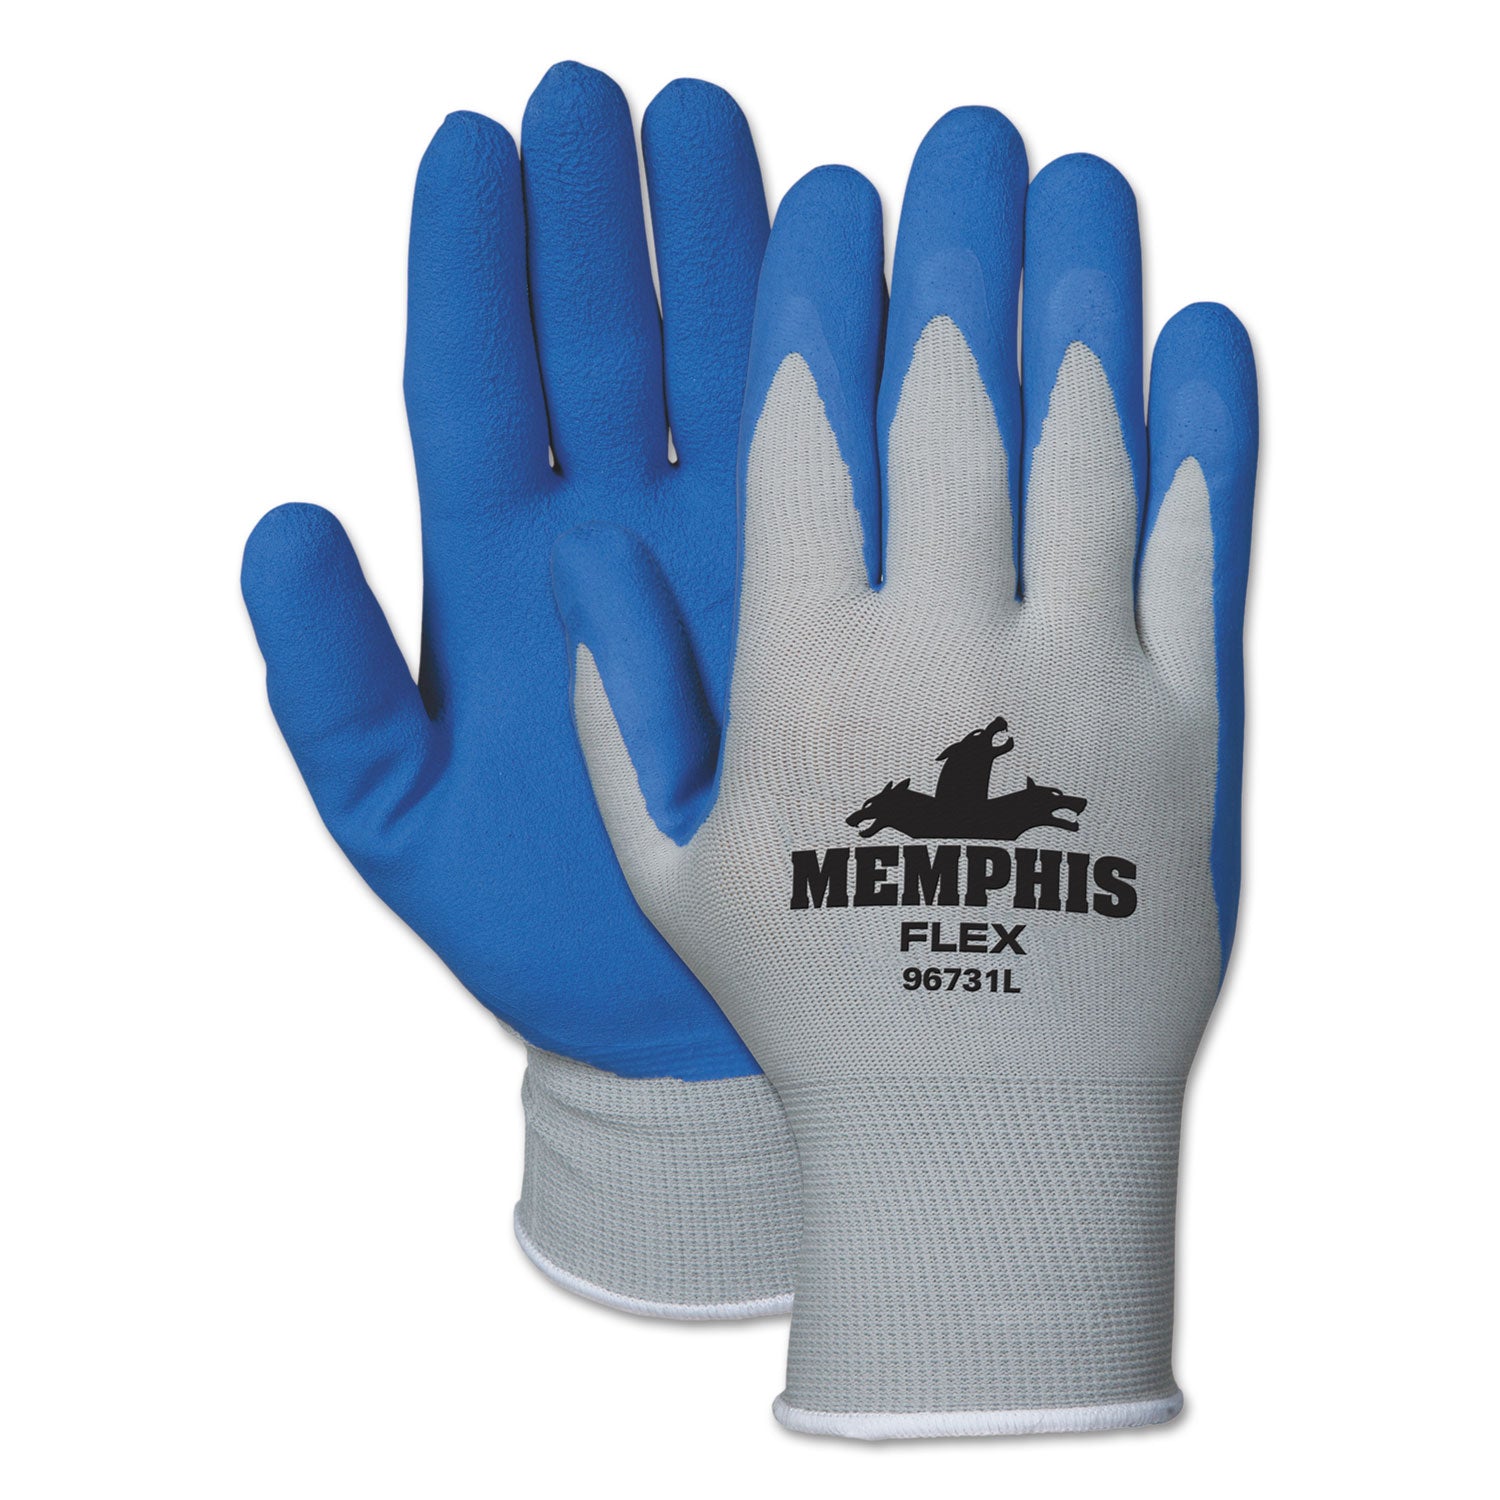 Memphis Flex Seamless Nylon Knit Gloves, X-Large, Blue/Gray, Pair - 